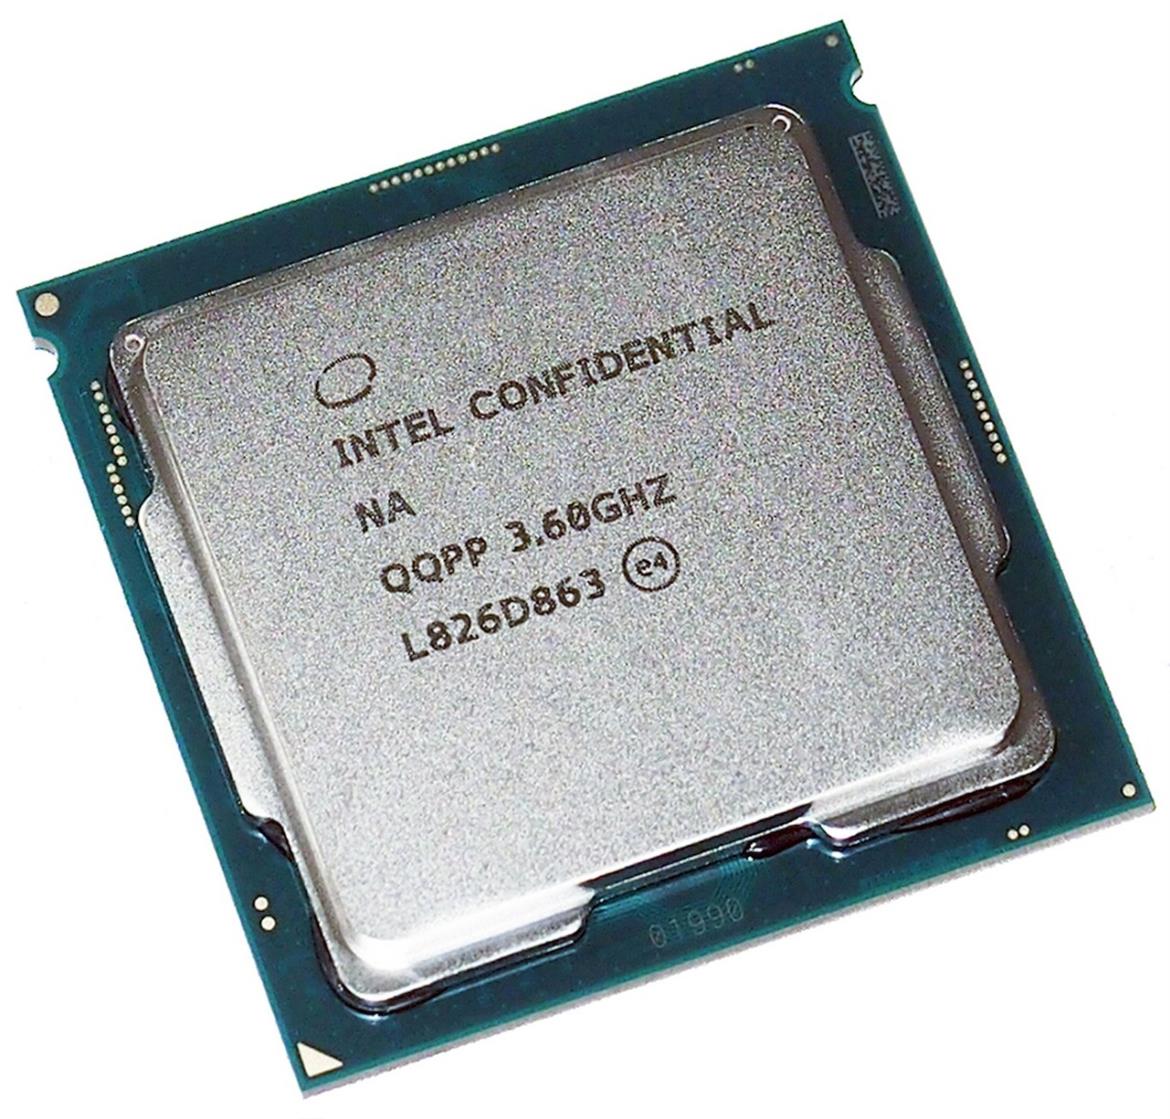 Intel Core i9-9900K CPU Review: 8-Core 9th Gen Coffee Lake Benchmarks